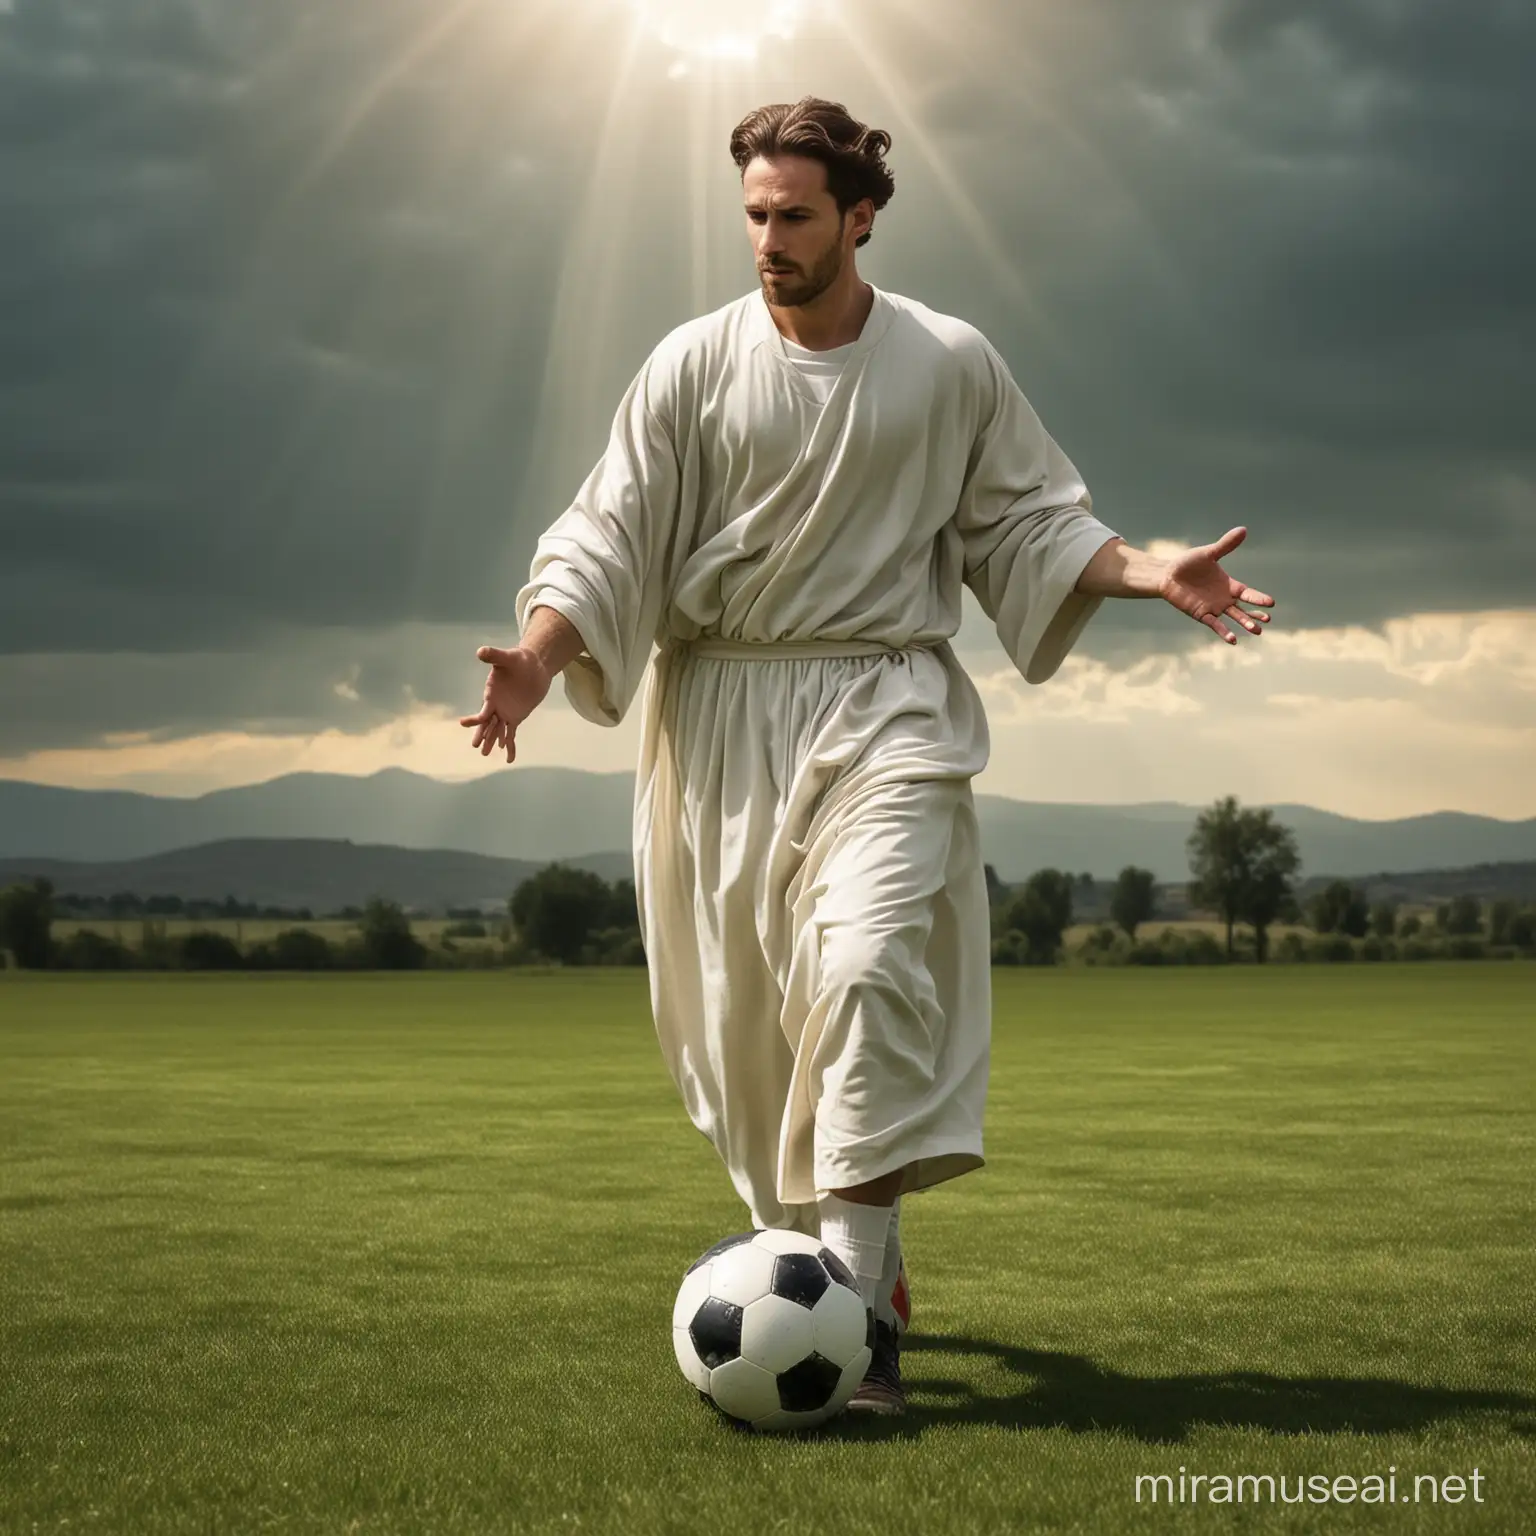 god playing fotball
